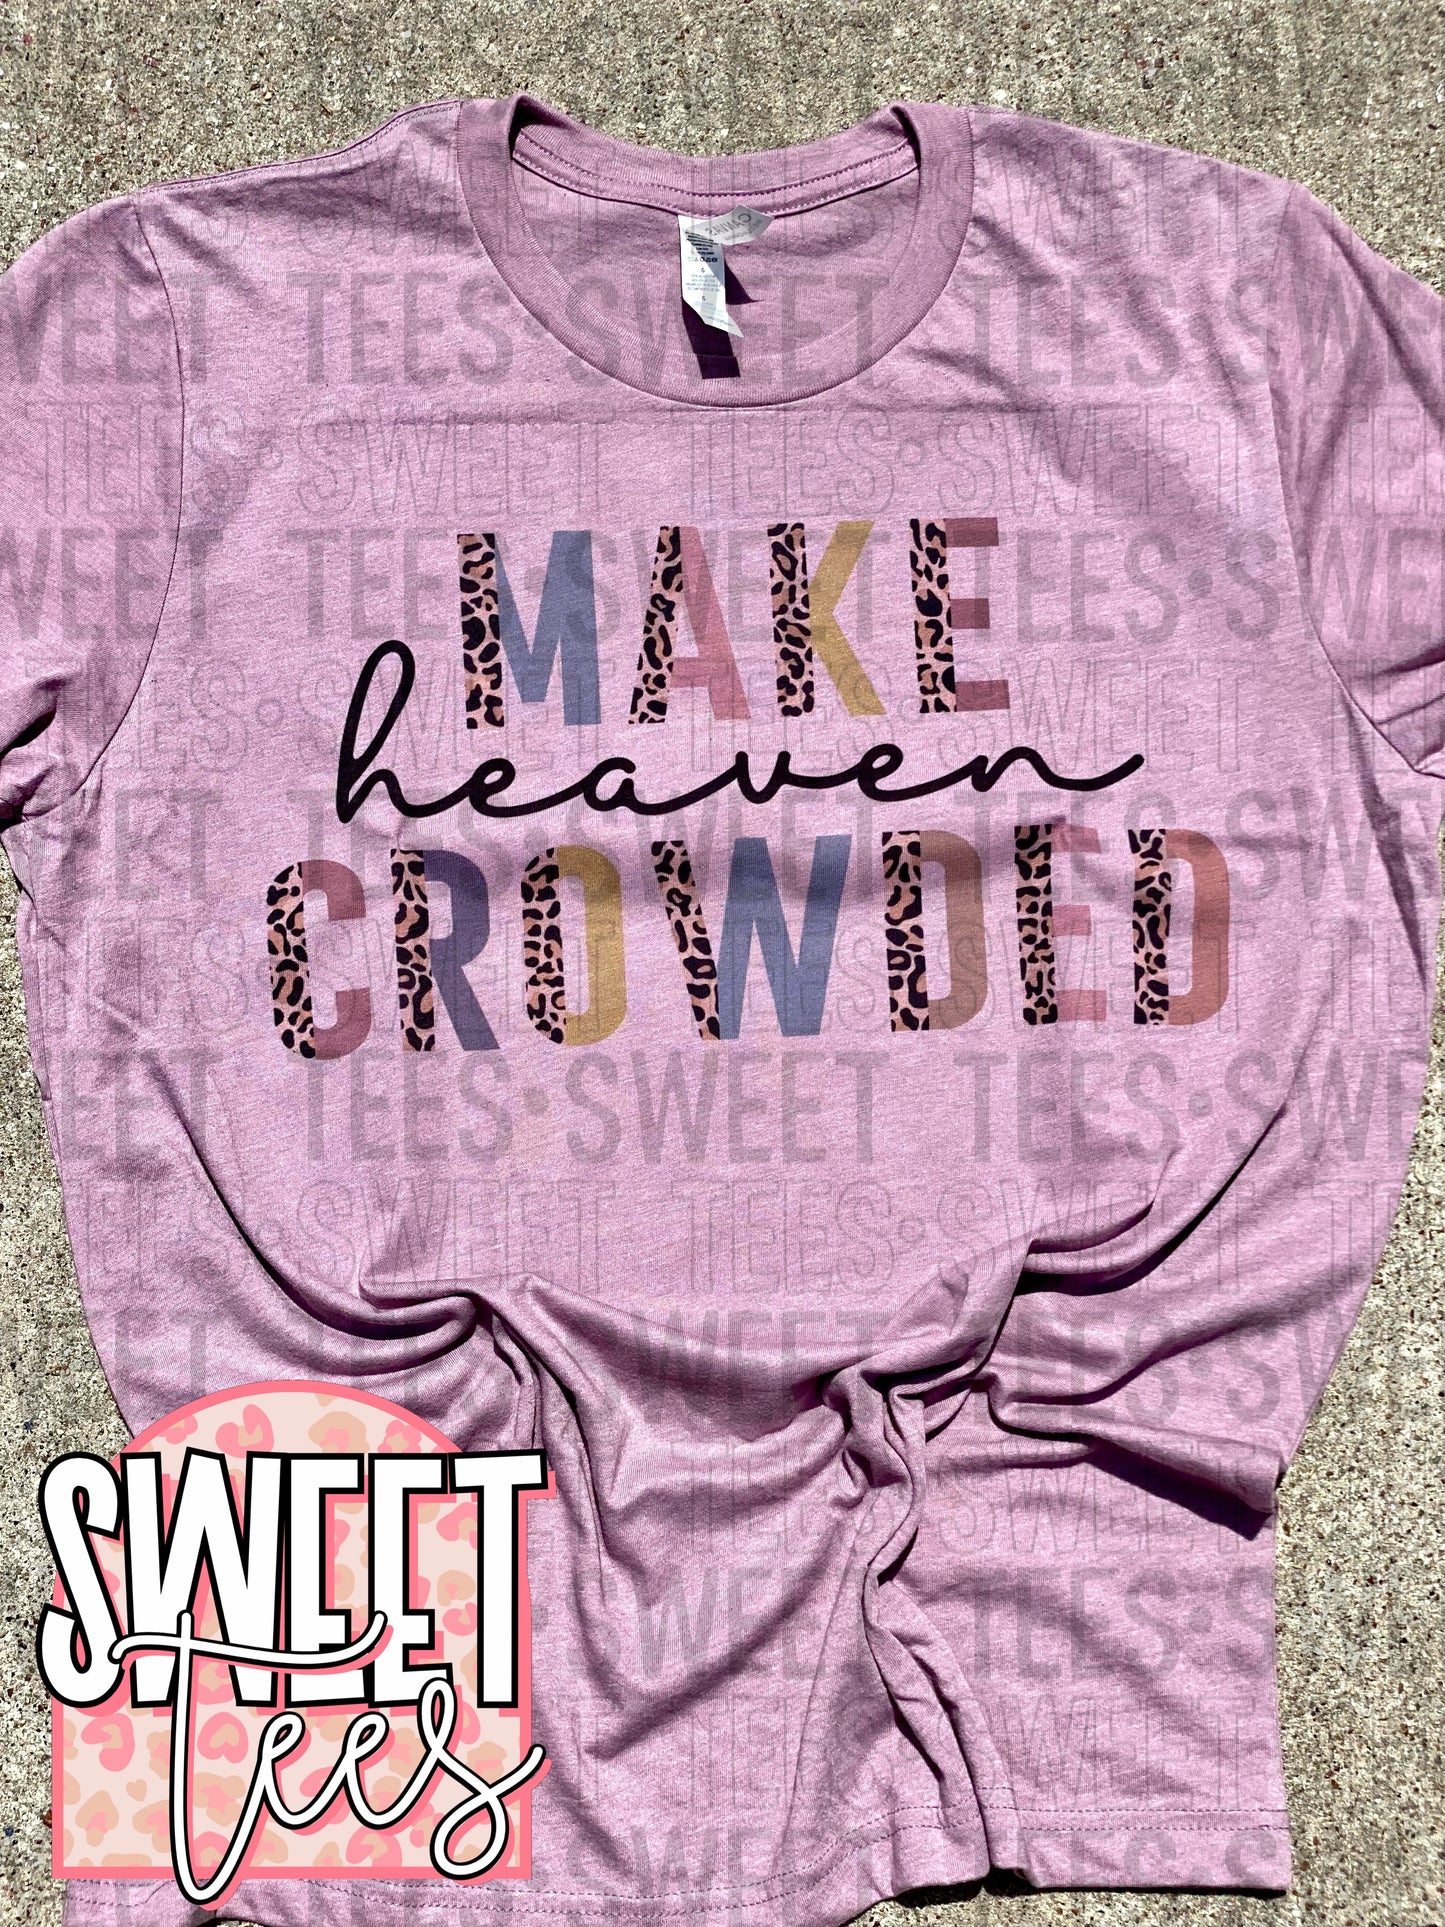 Make Heaven Crowded - solid tee